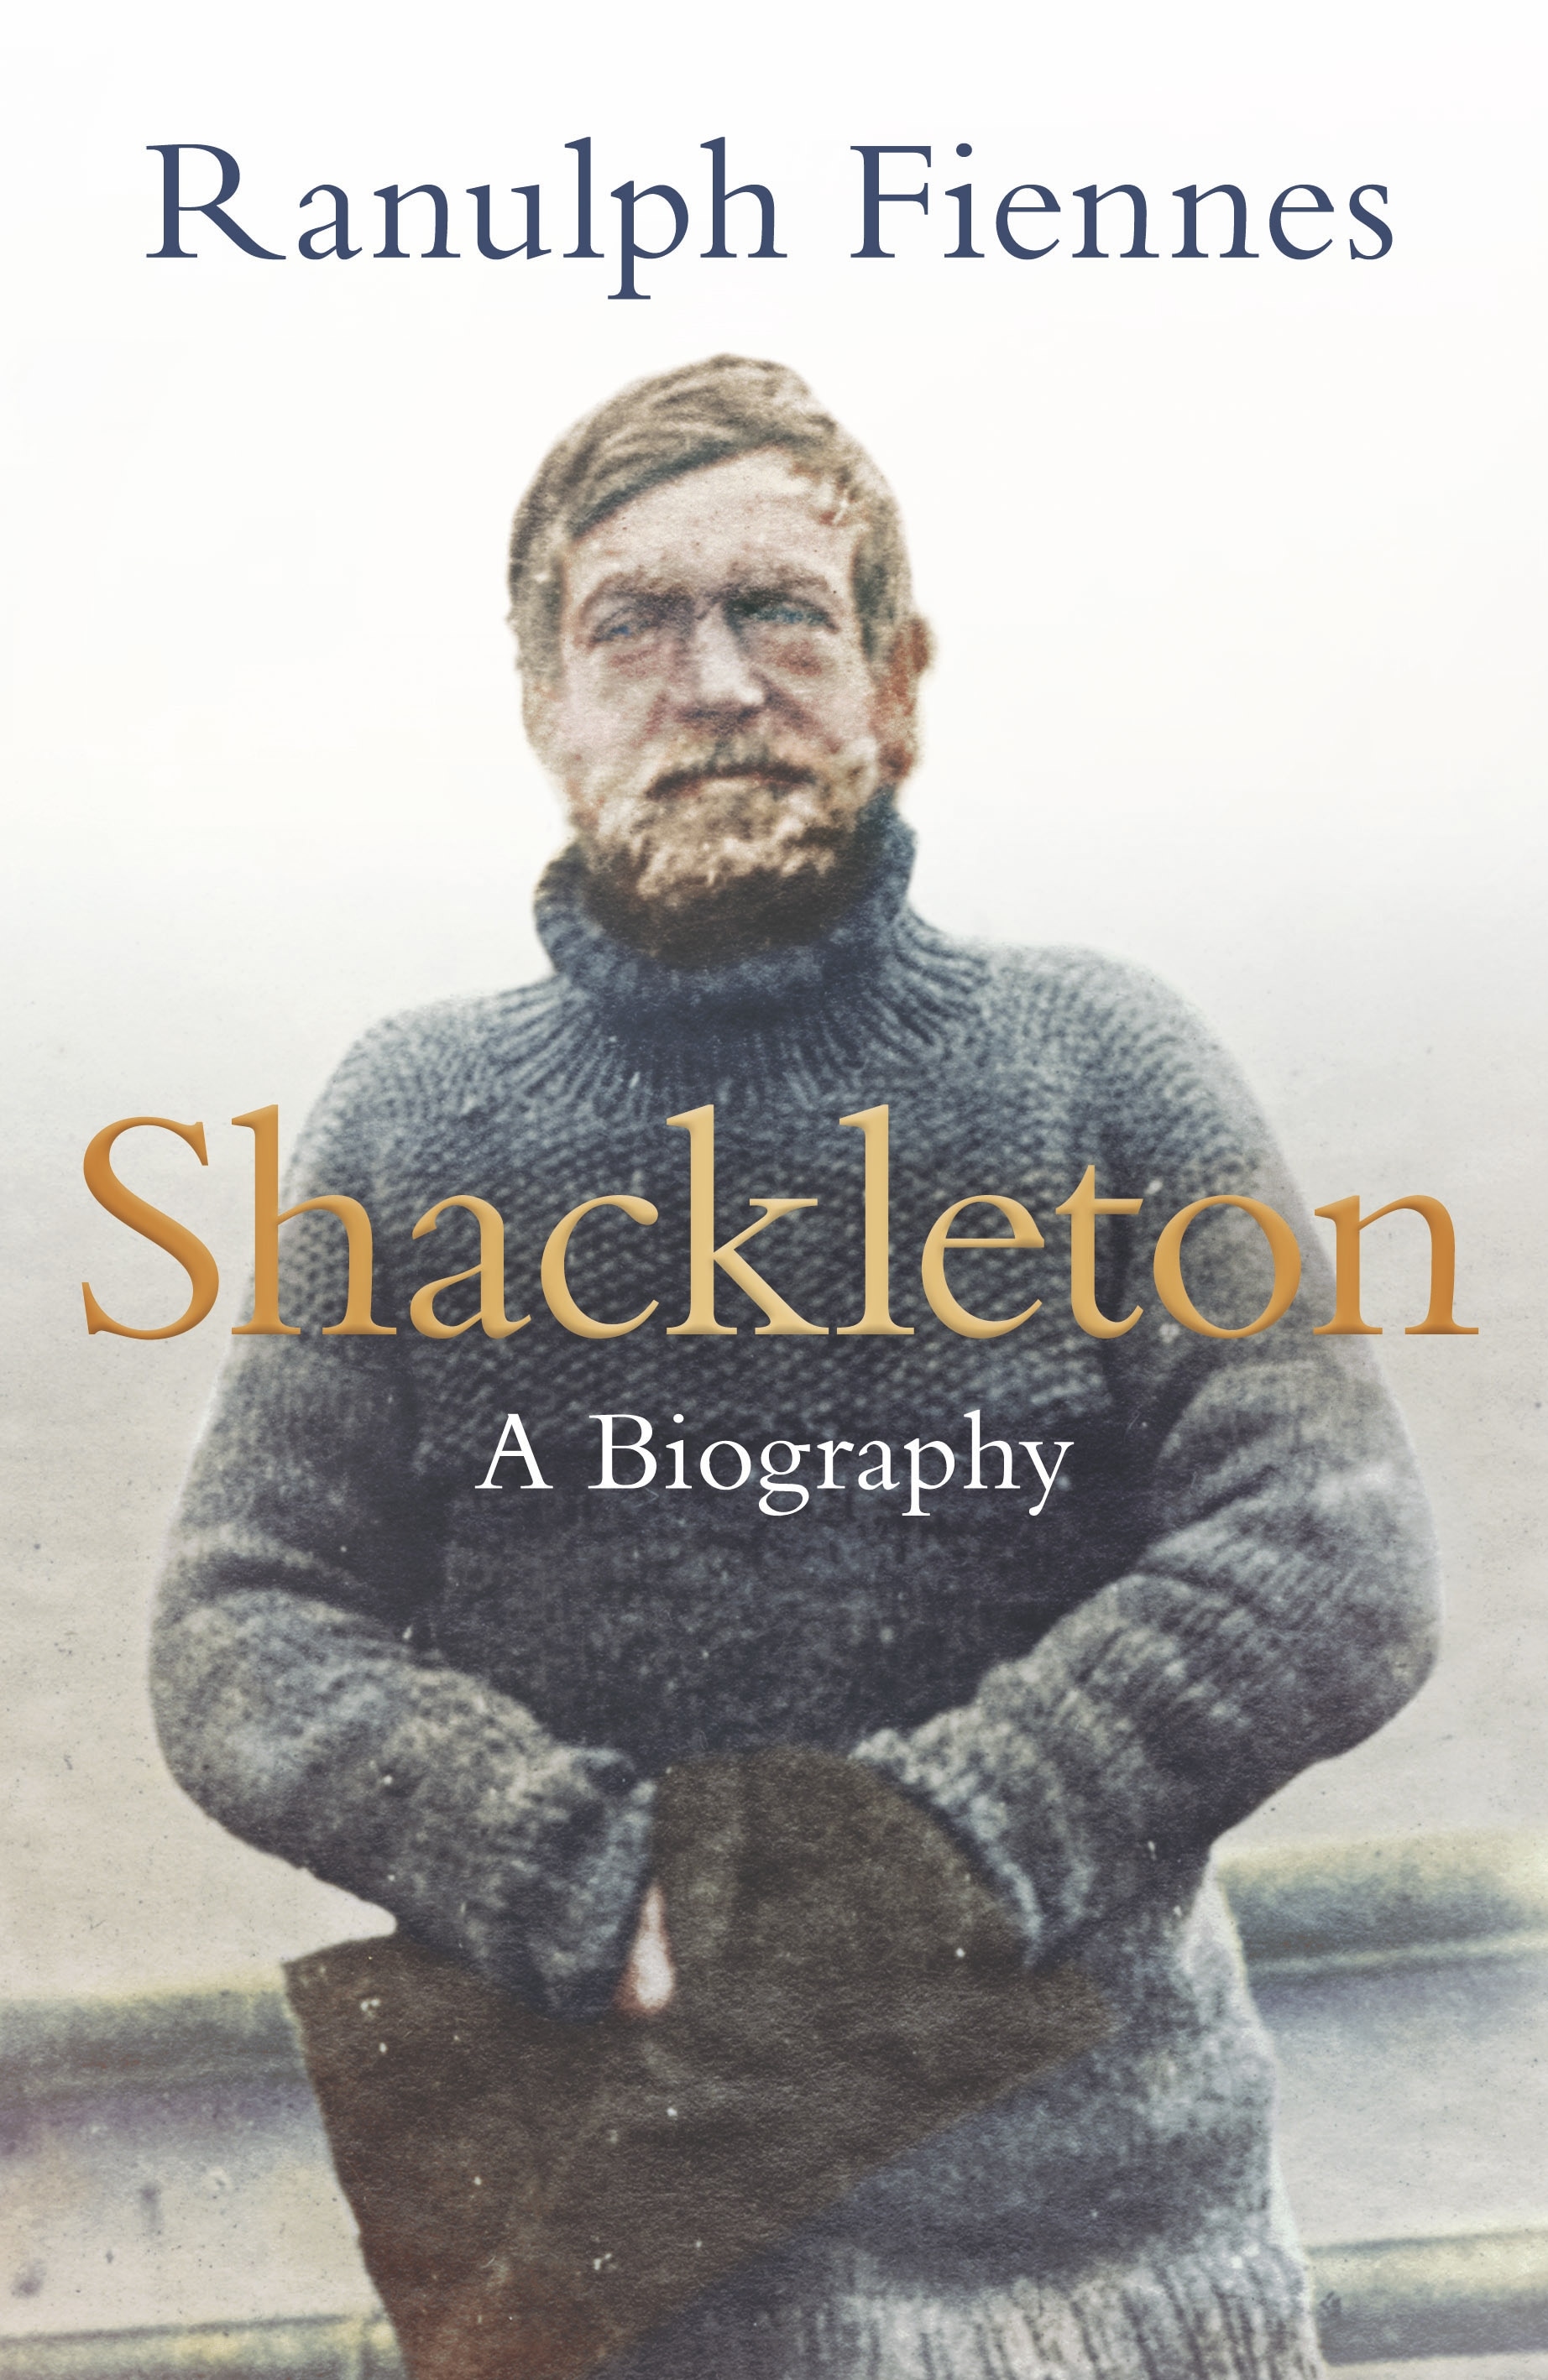 Book “Shackleton” by Ranulph Fiennes — September 16, 2021